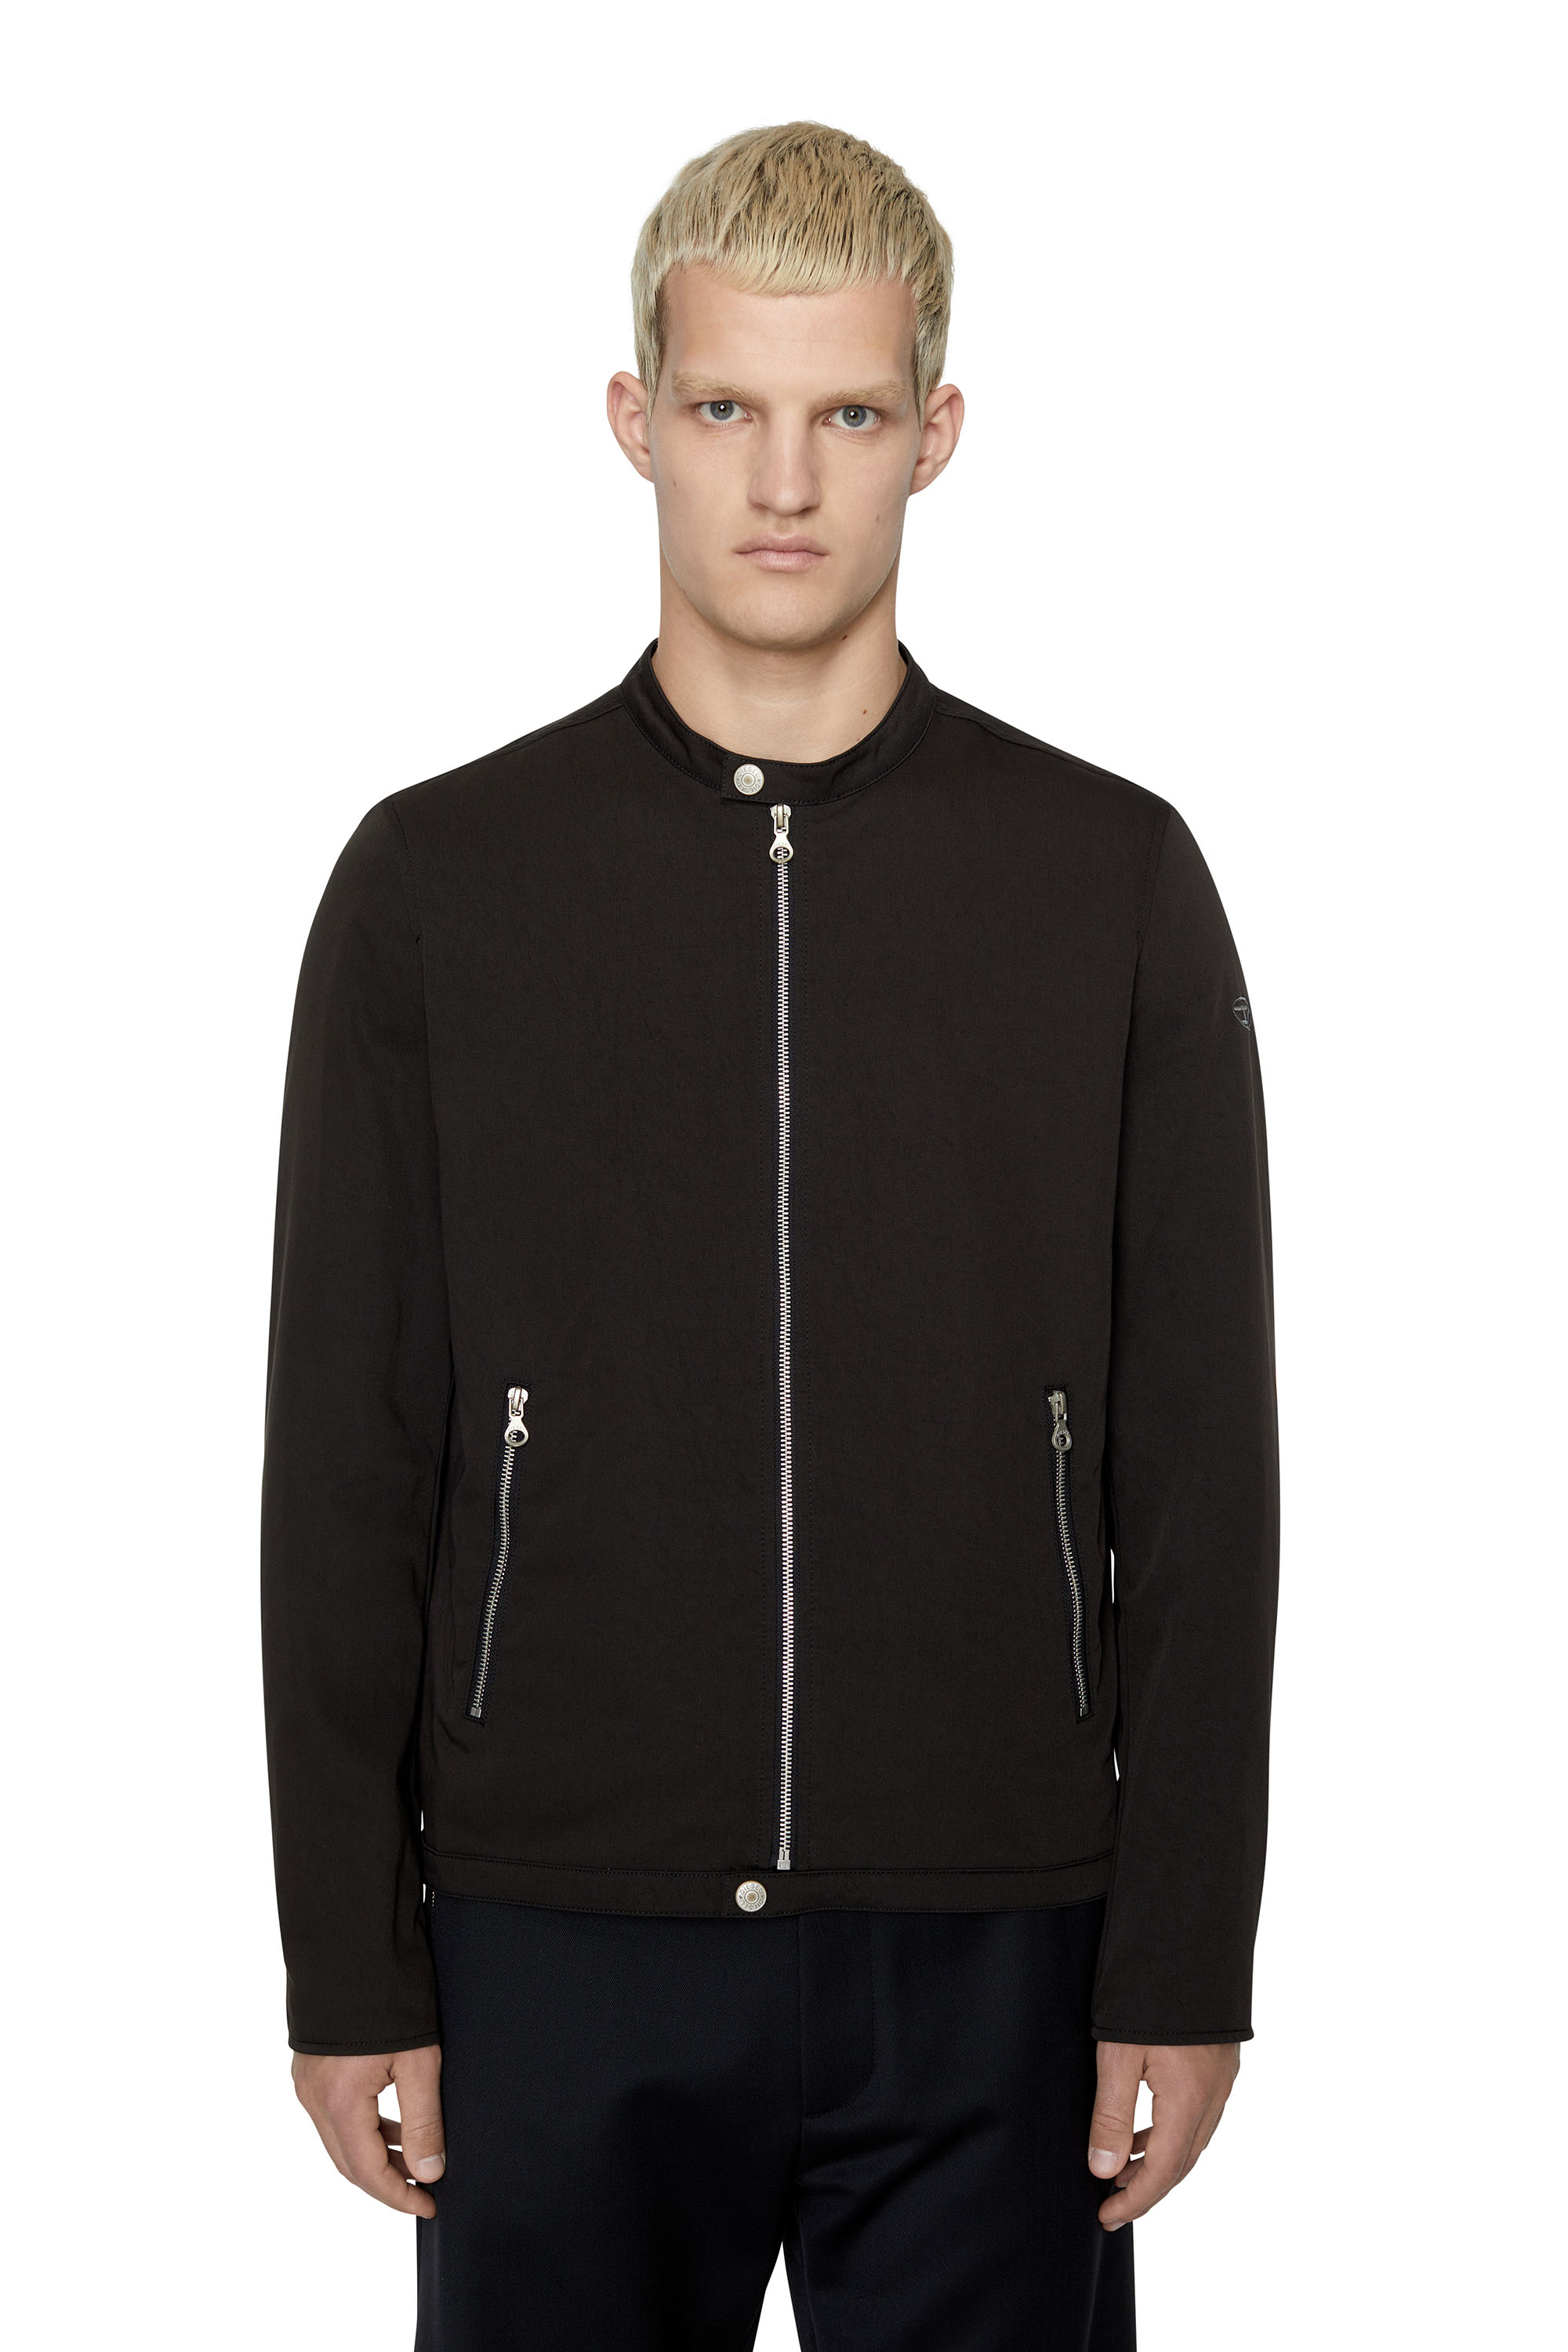 Diesel - J-GLORY-NW, Man Biker jacket in cotton-touch nylon in Black - Image 1